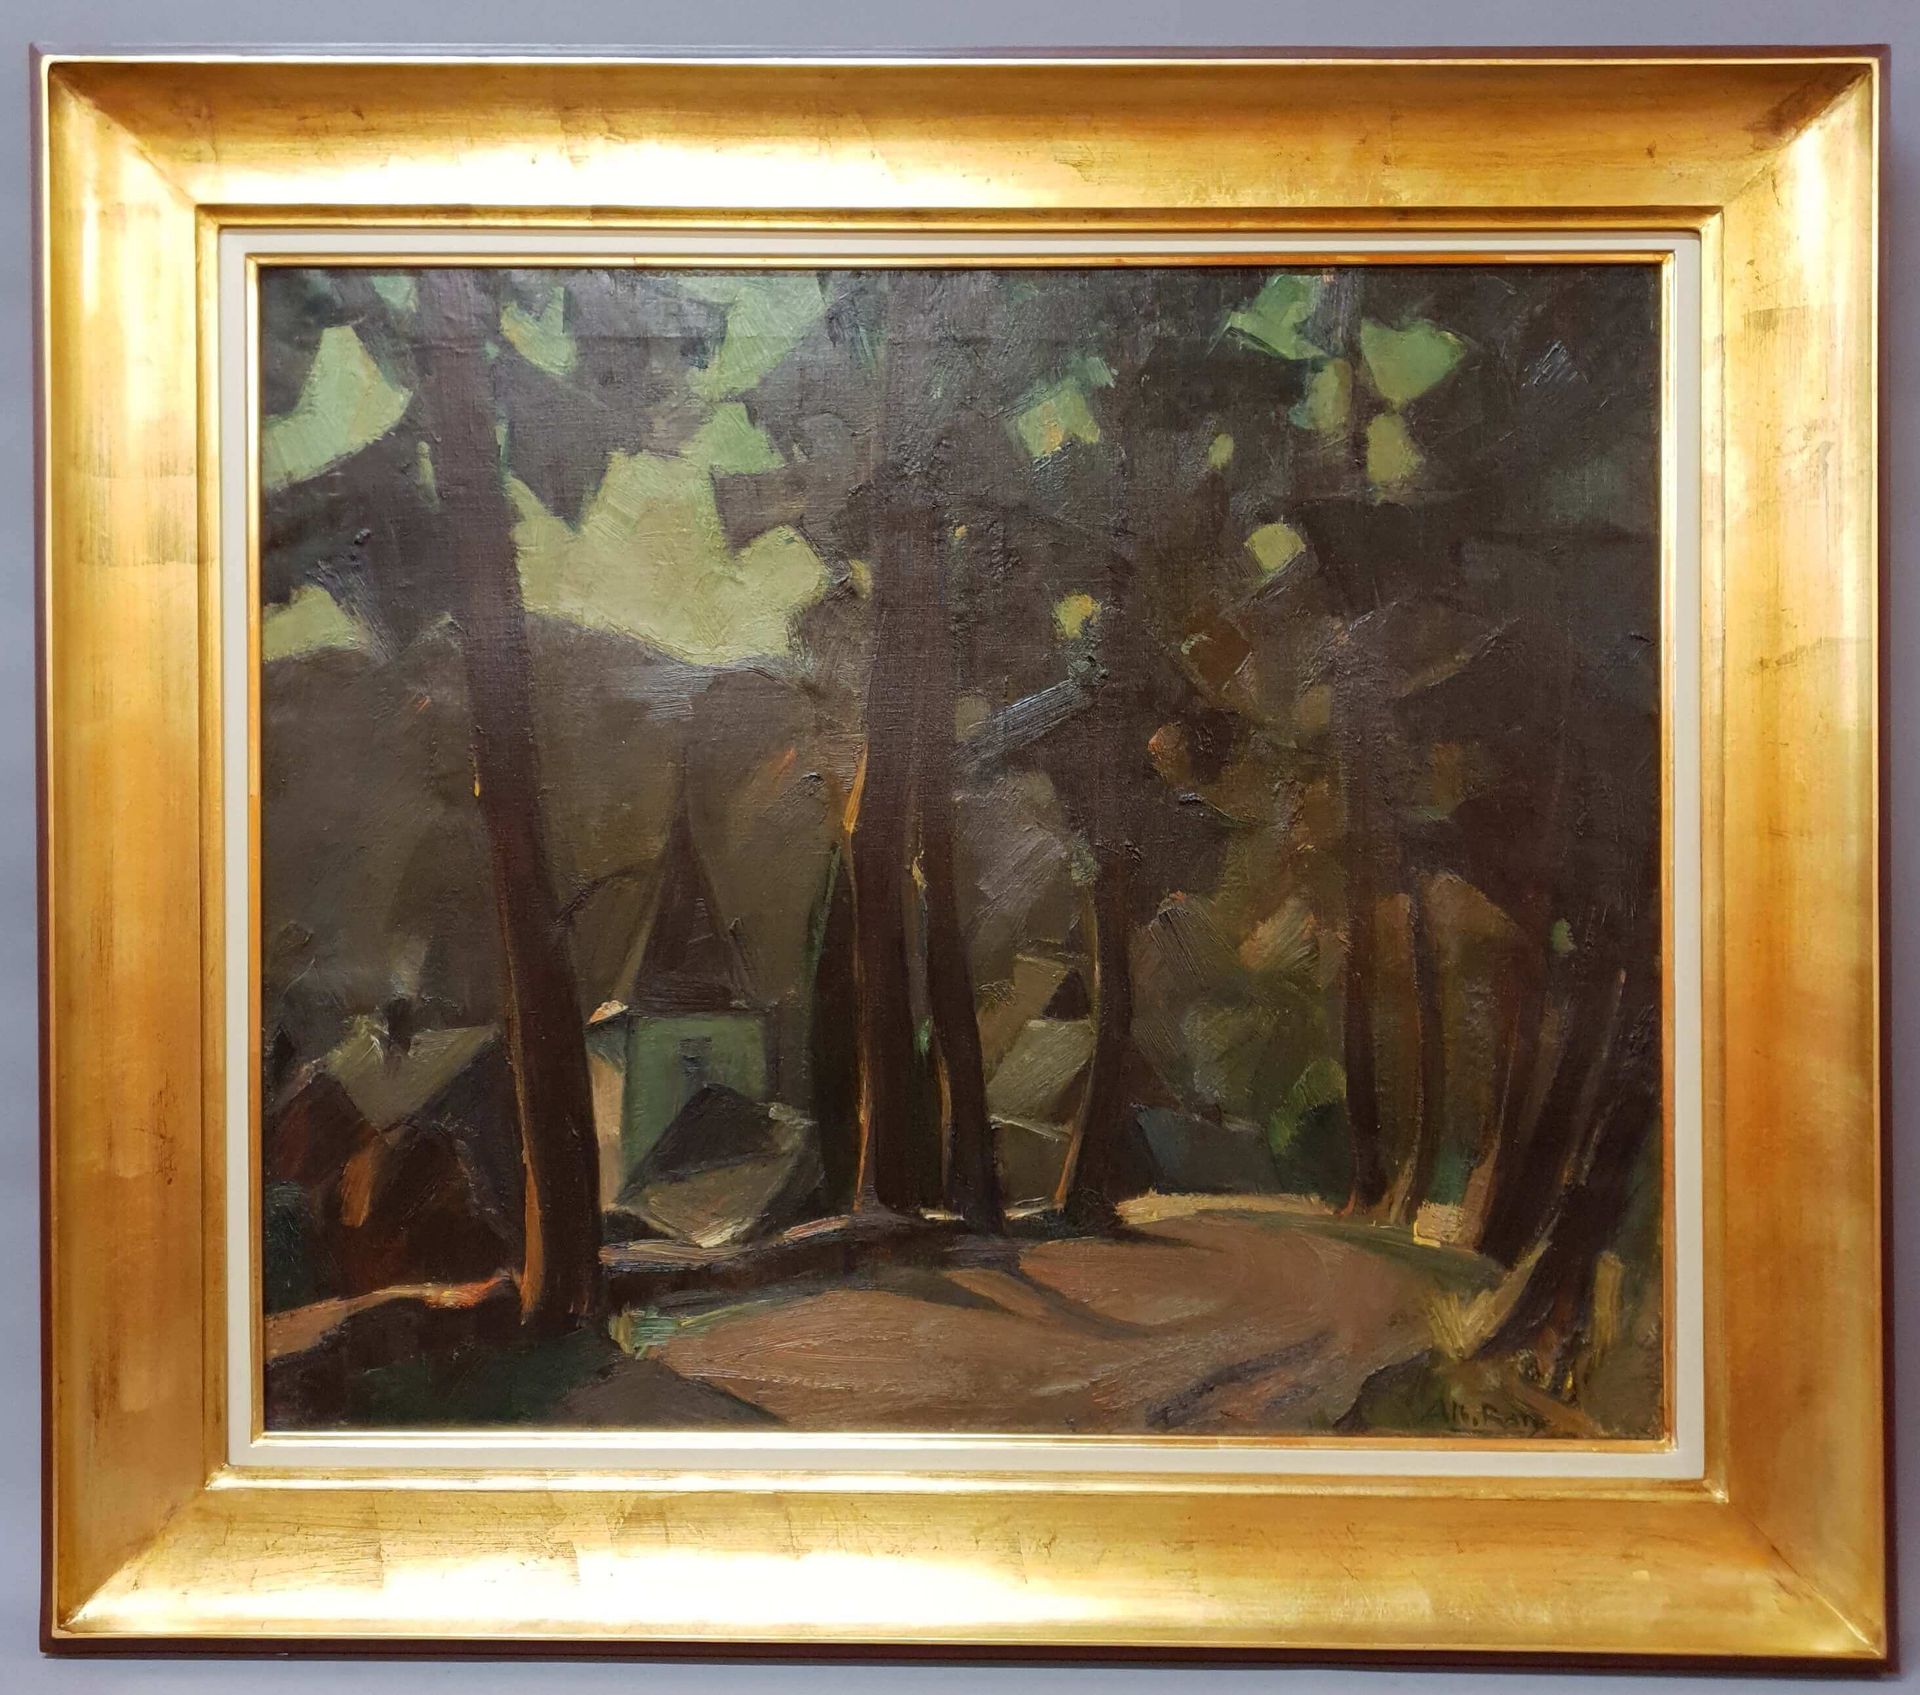 RATY Albert (1889-1970) 签名为Alb的面板油画。拉蒂 "La route ardennaise"。作品背面有标题和会签。67x80厘米